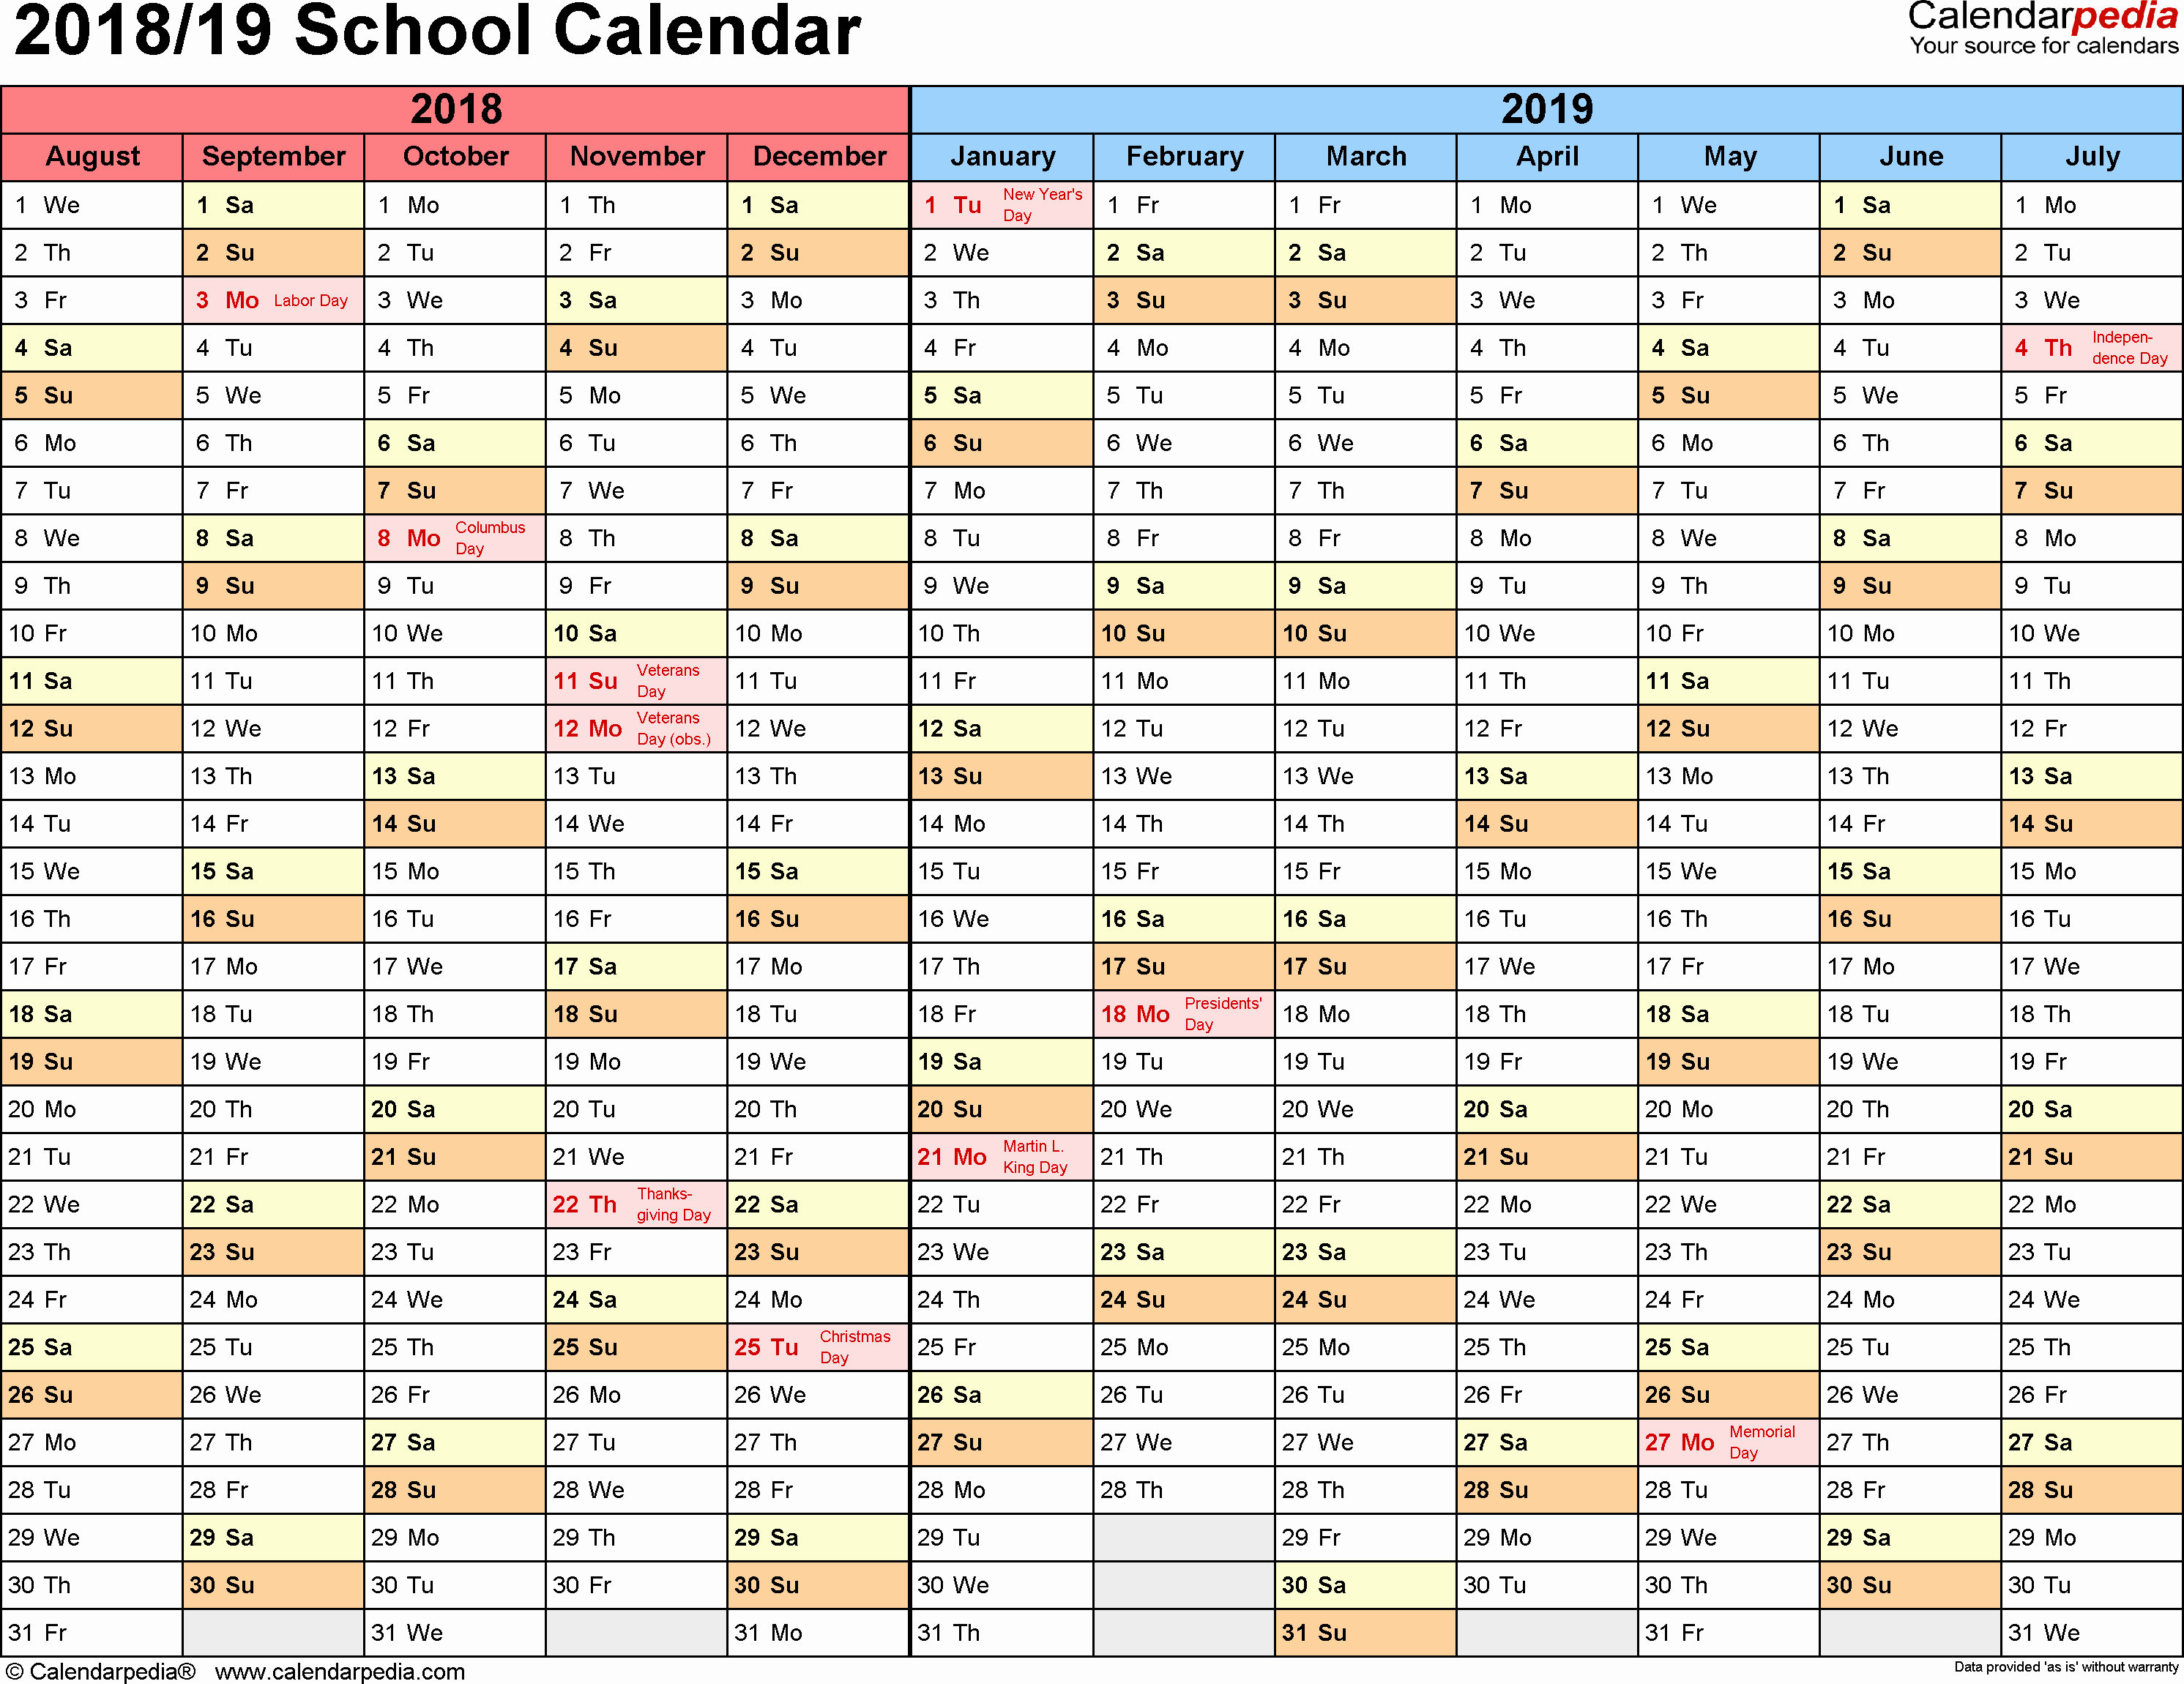 School Calendar 2018 19 Template Inspirational School Calendars 2018 2019 as Free Printable Excel Templates